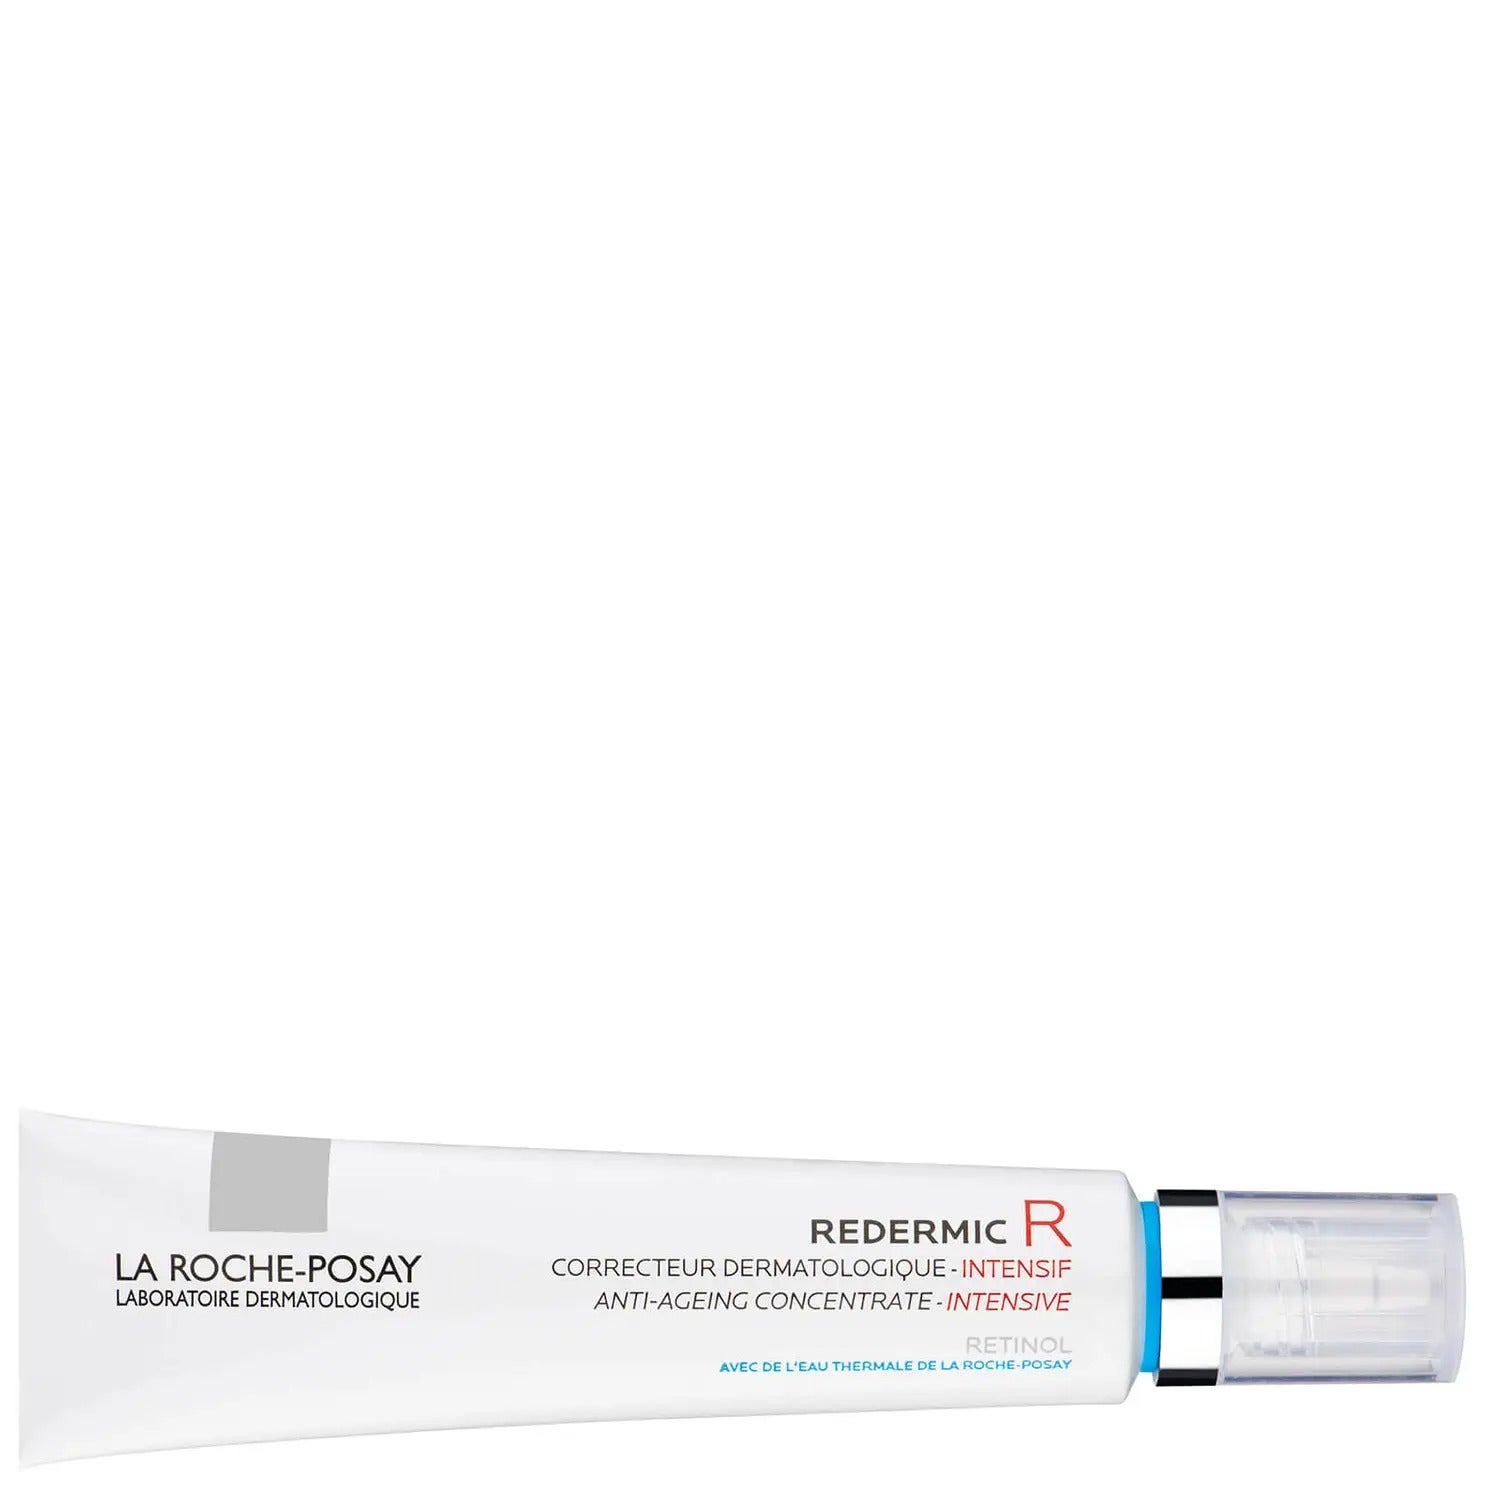 La Roche-Posay + [R] Anti-Wrinkle Retinol Treatment